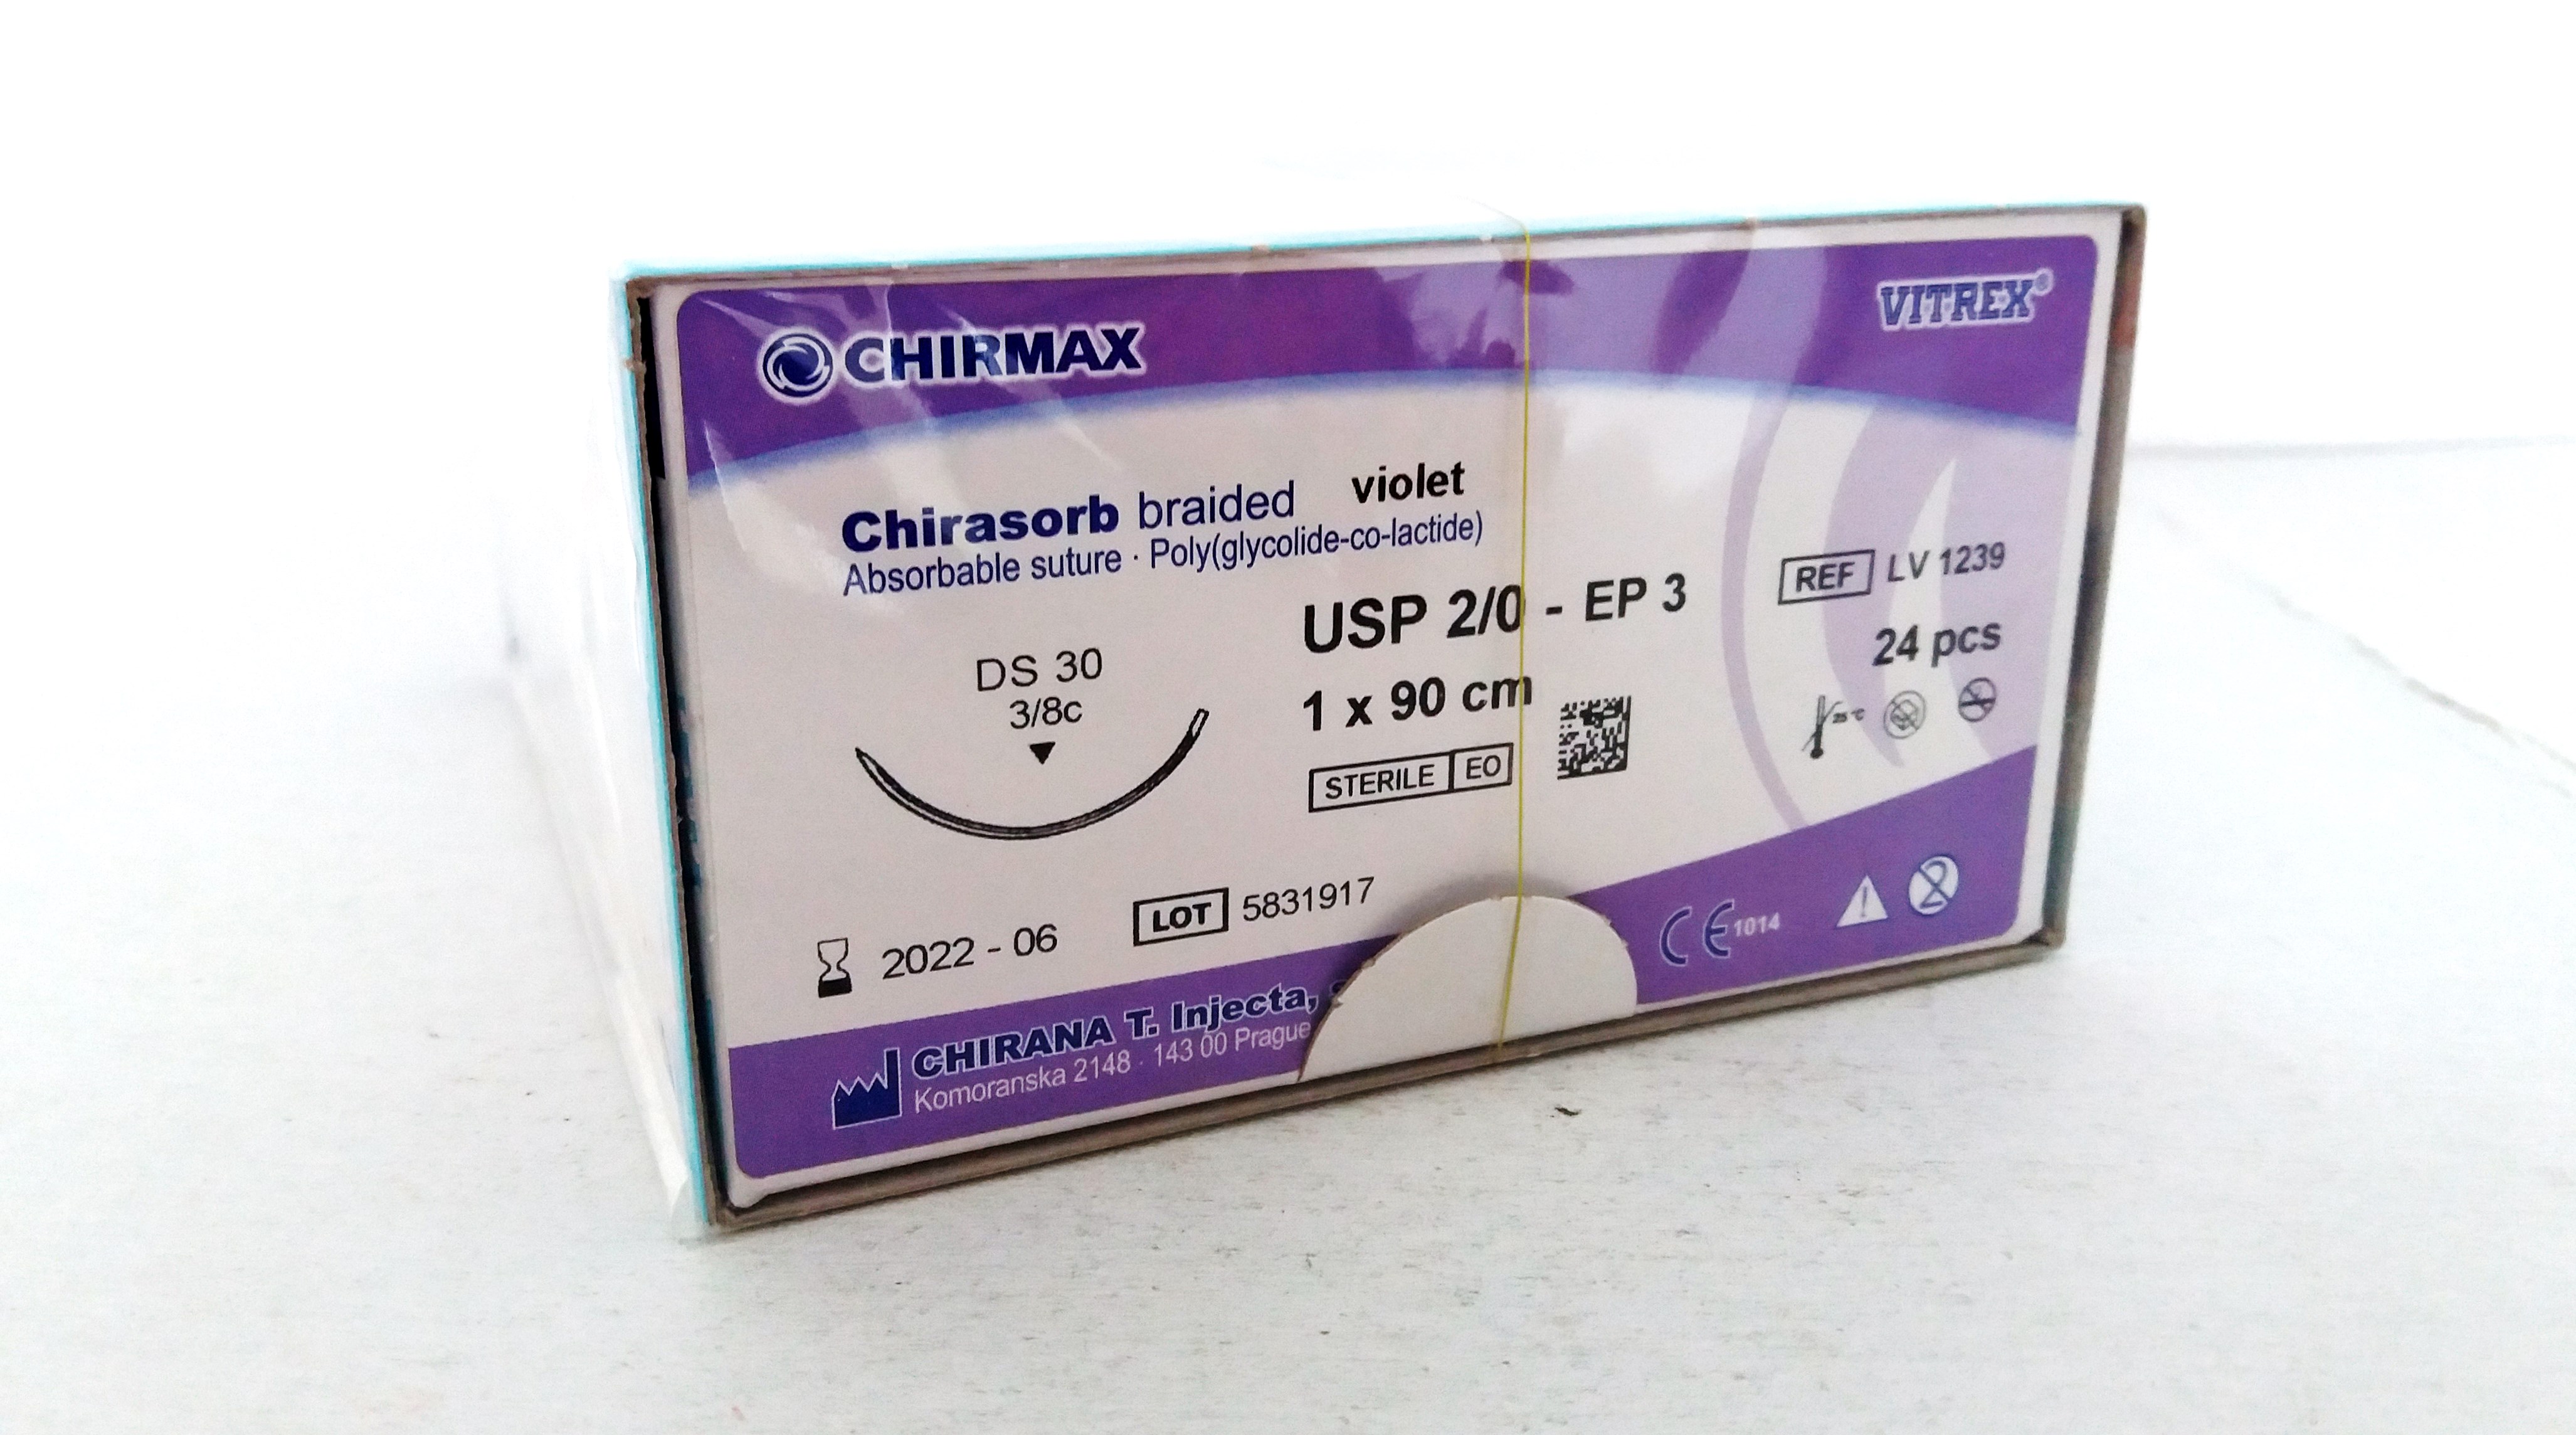 Suture Chirasorb Vitrex USP 0, needle 30 mm reverse cutting, 3/8 circle, 90 cm